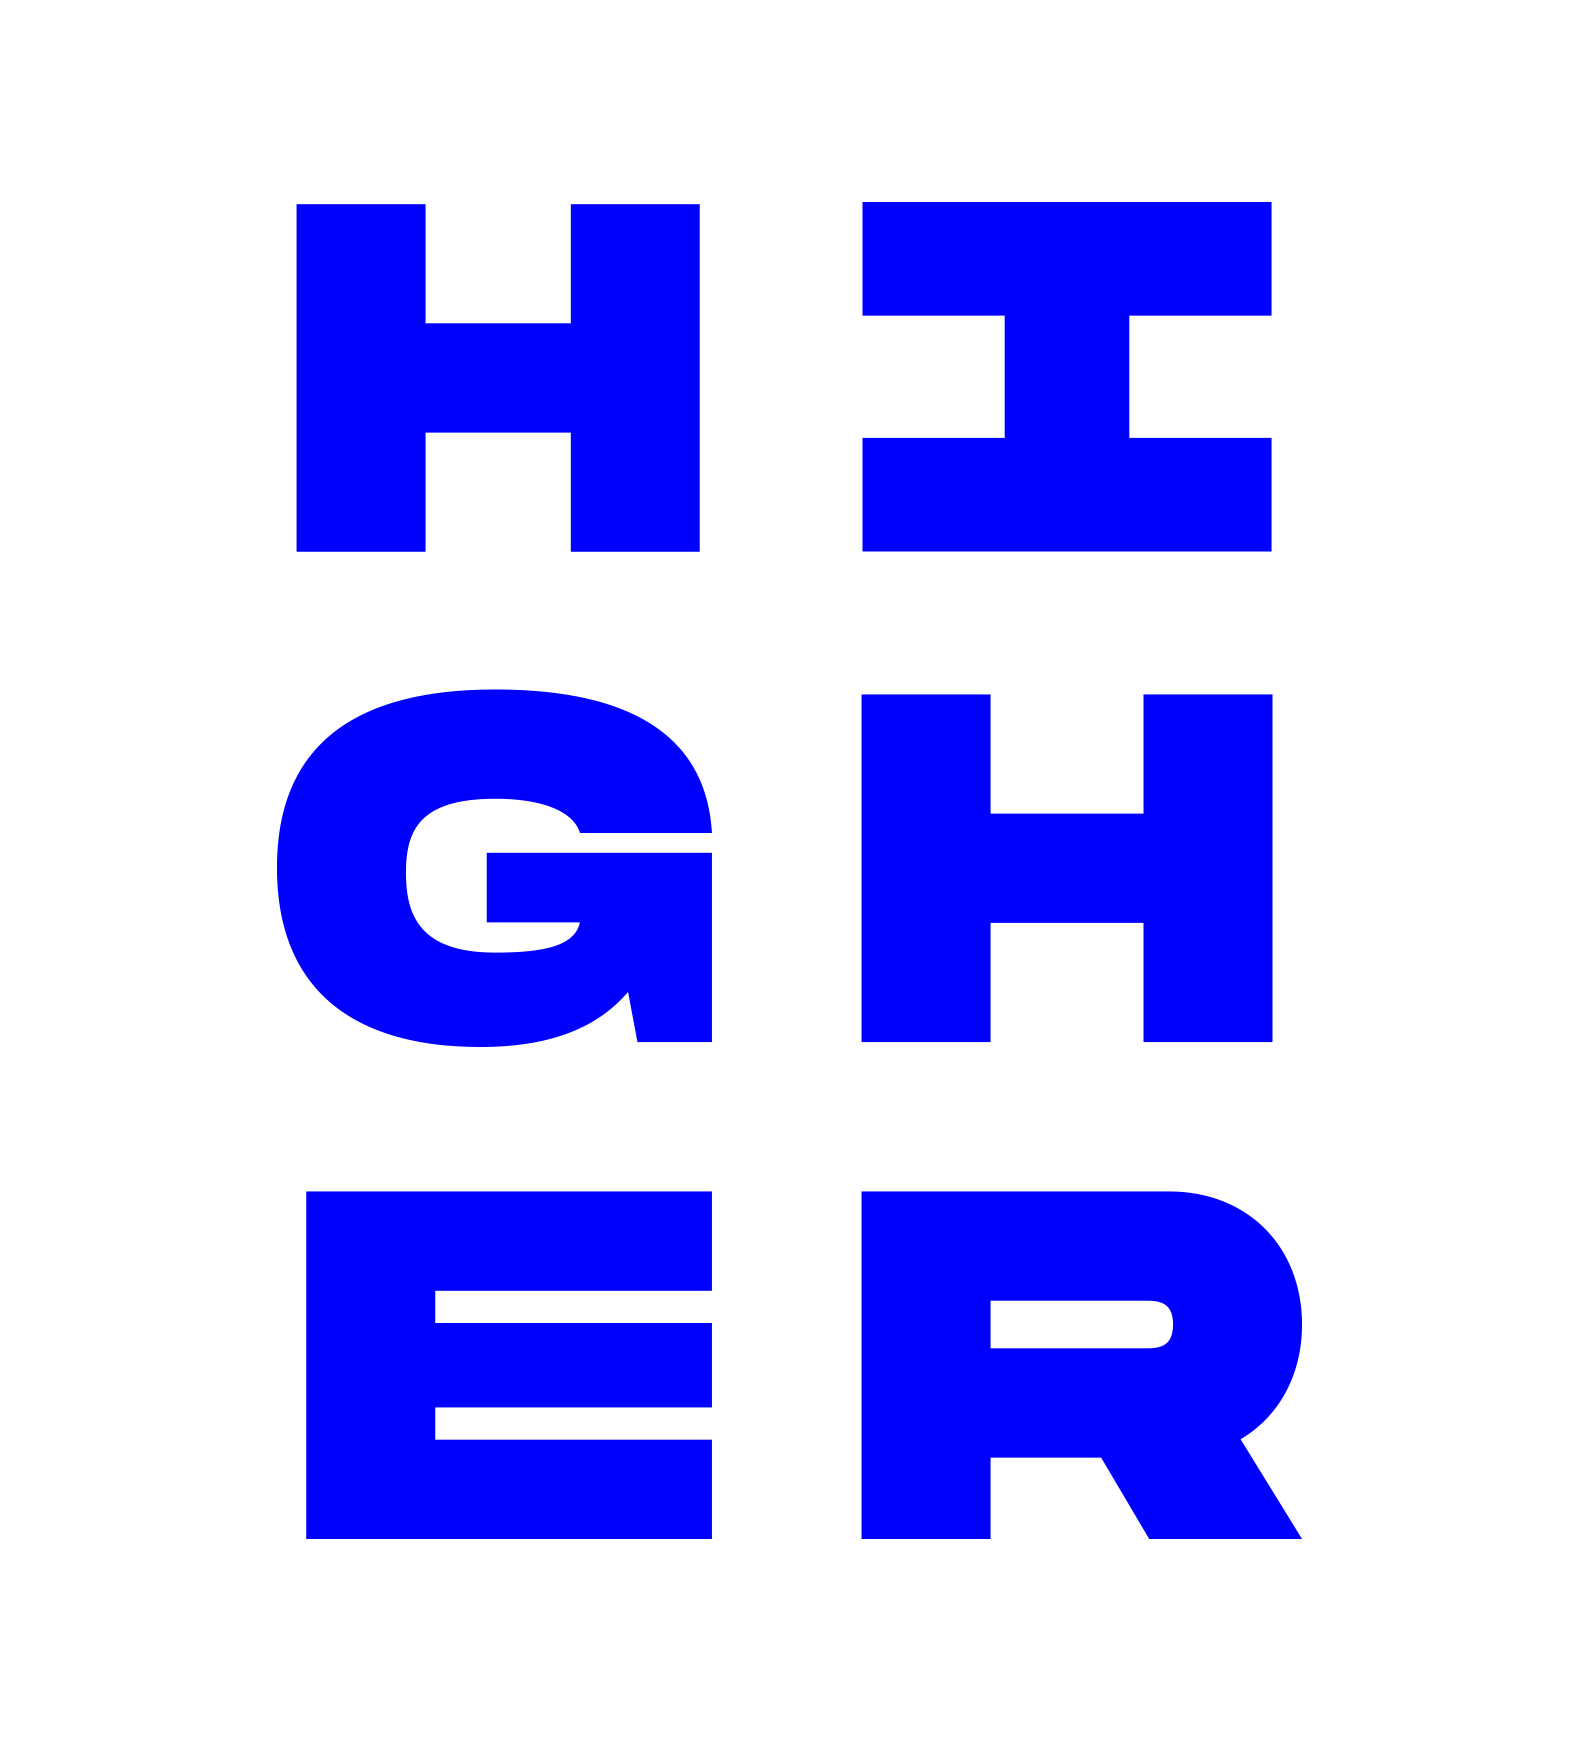 HIGHER Community